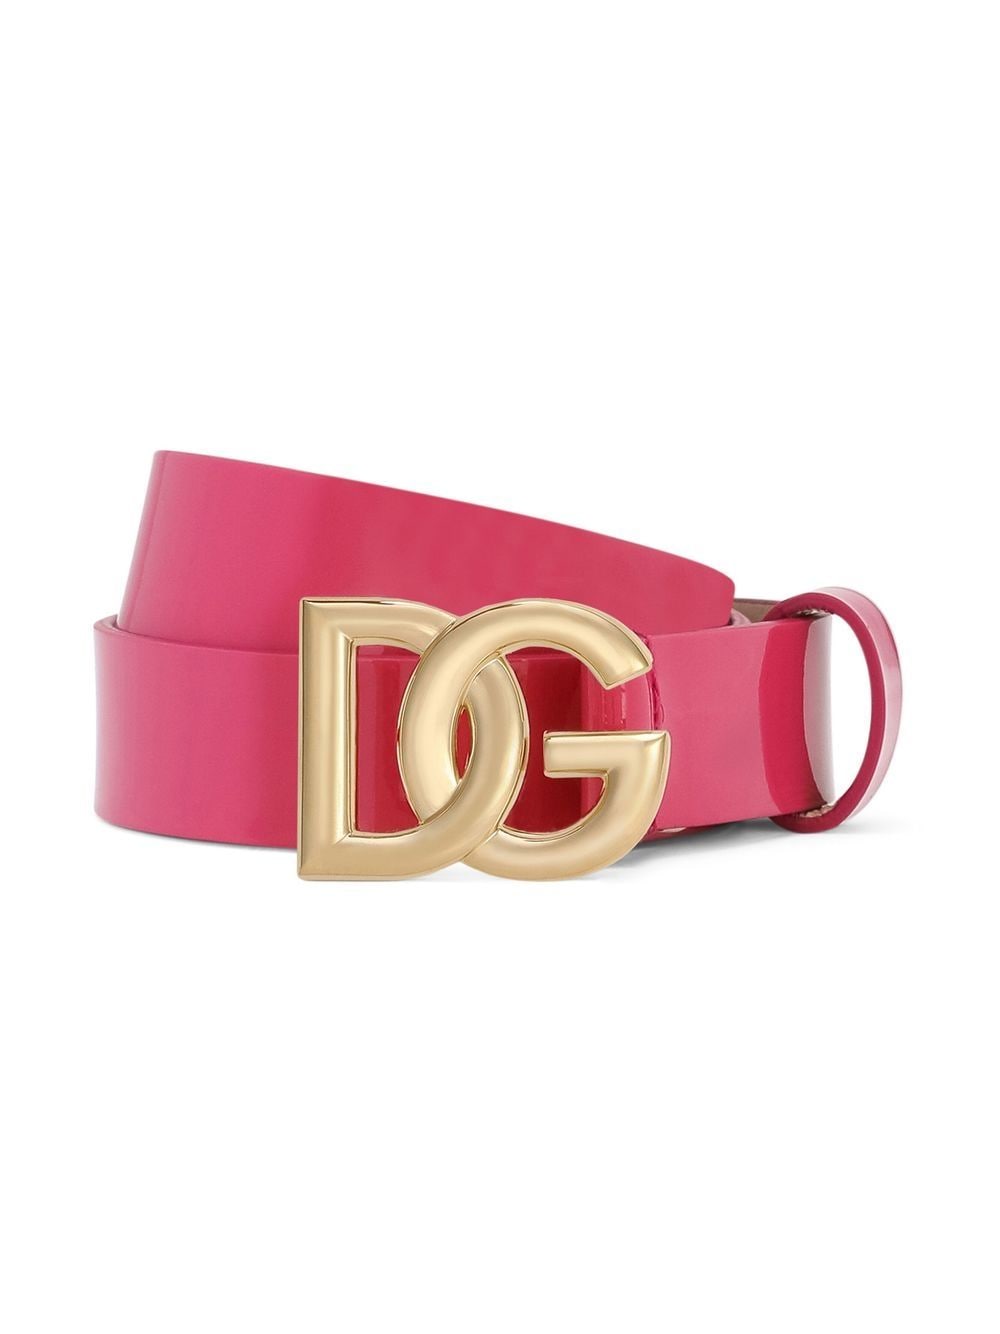 Cintura con logo DG - Rubino Kids